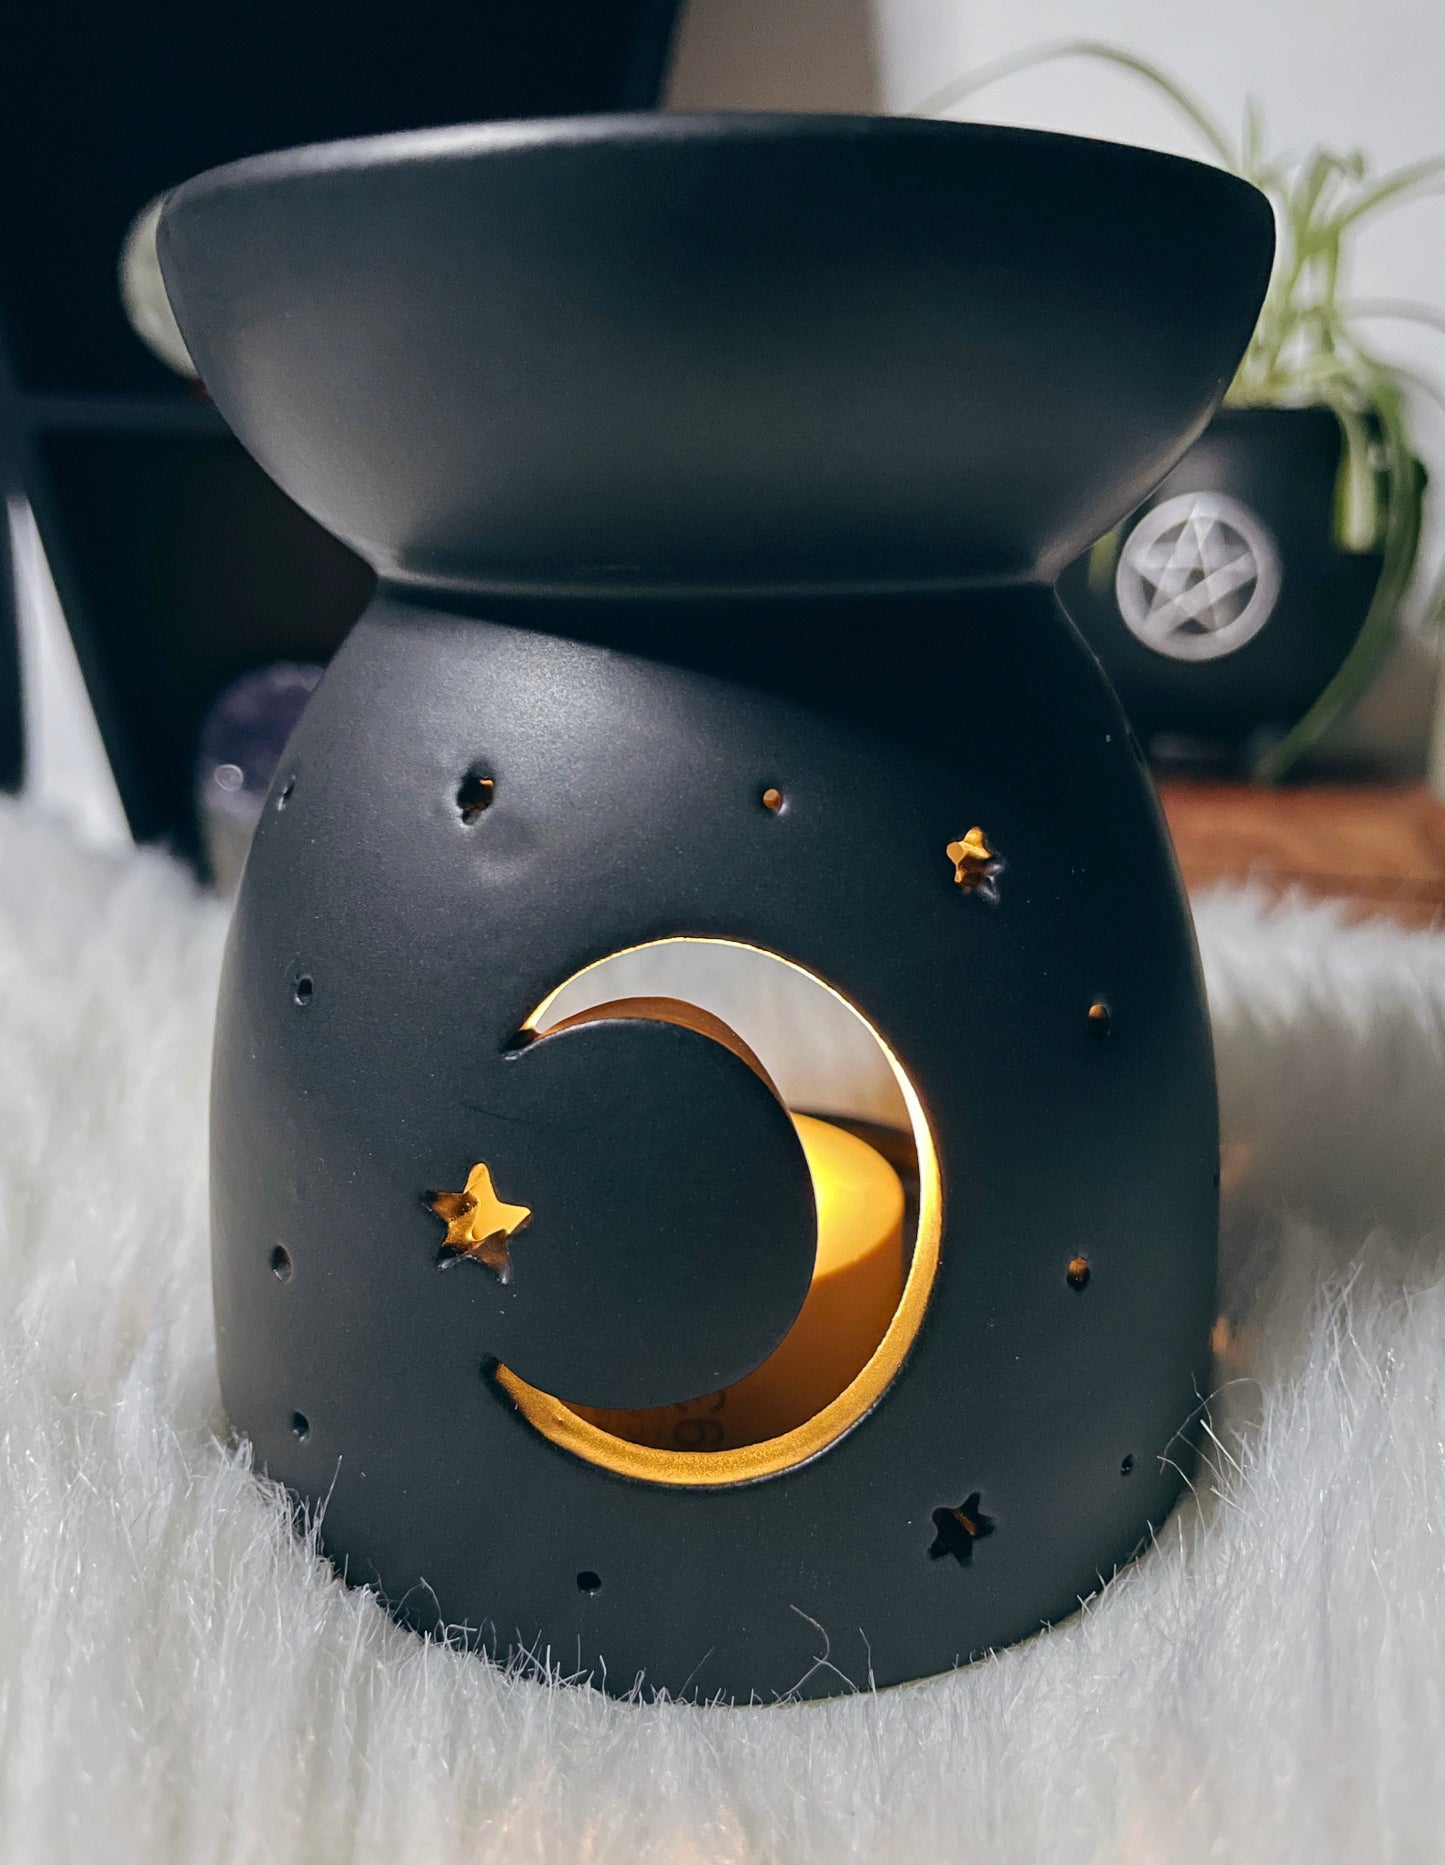 A black ceramic oil burner / wax melt burner with a crescent moon design cut out.